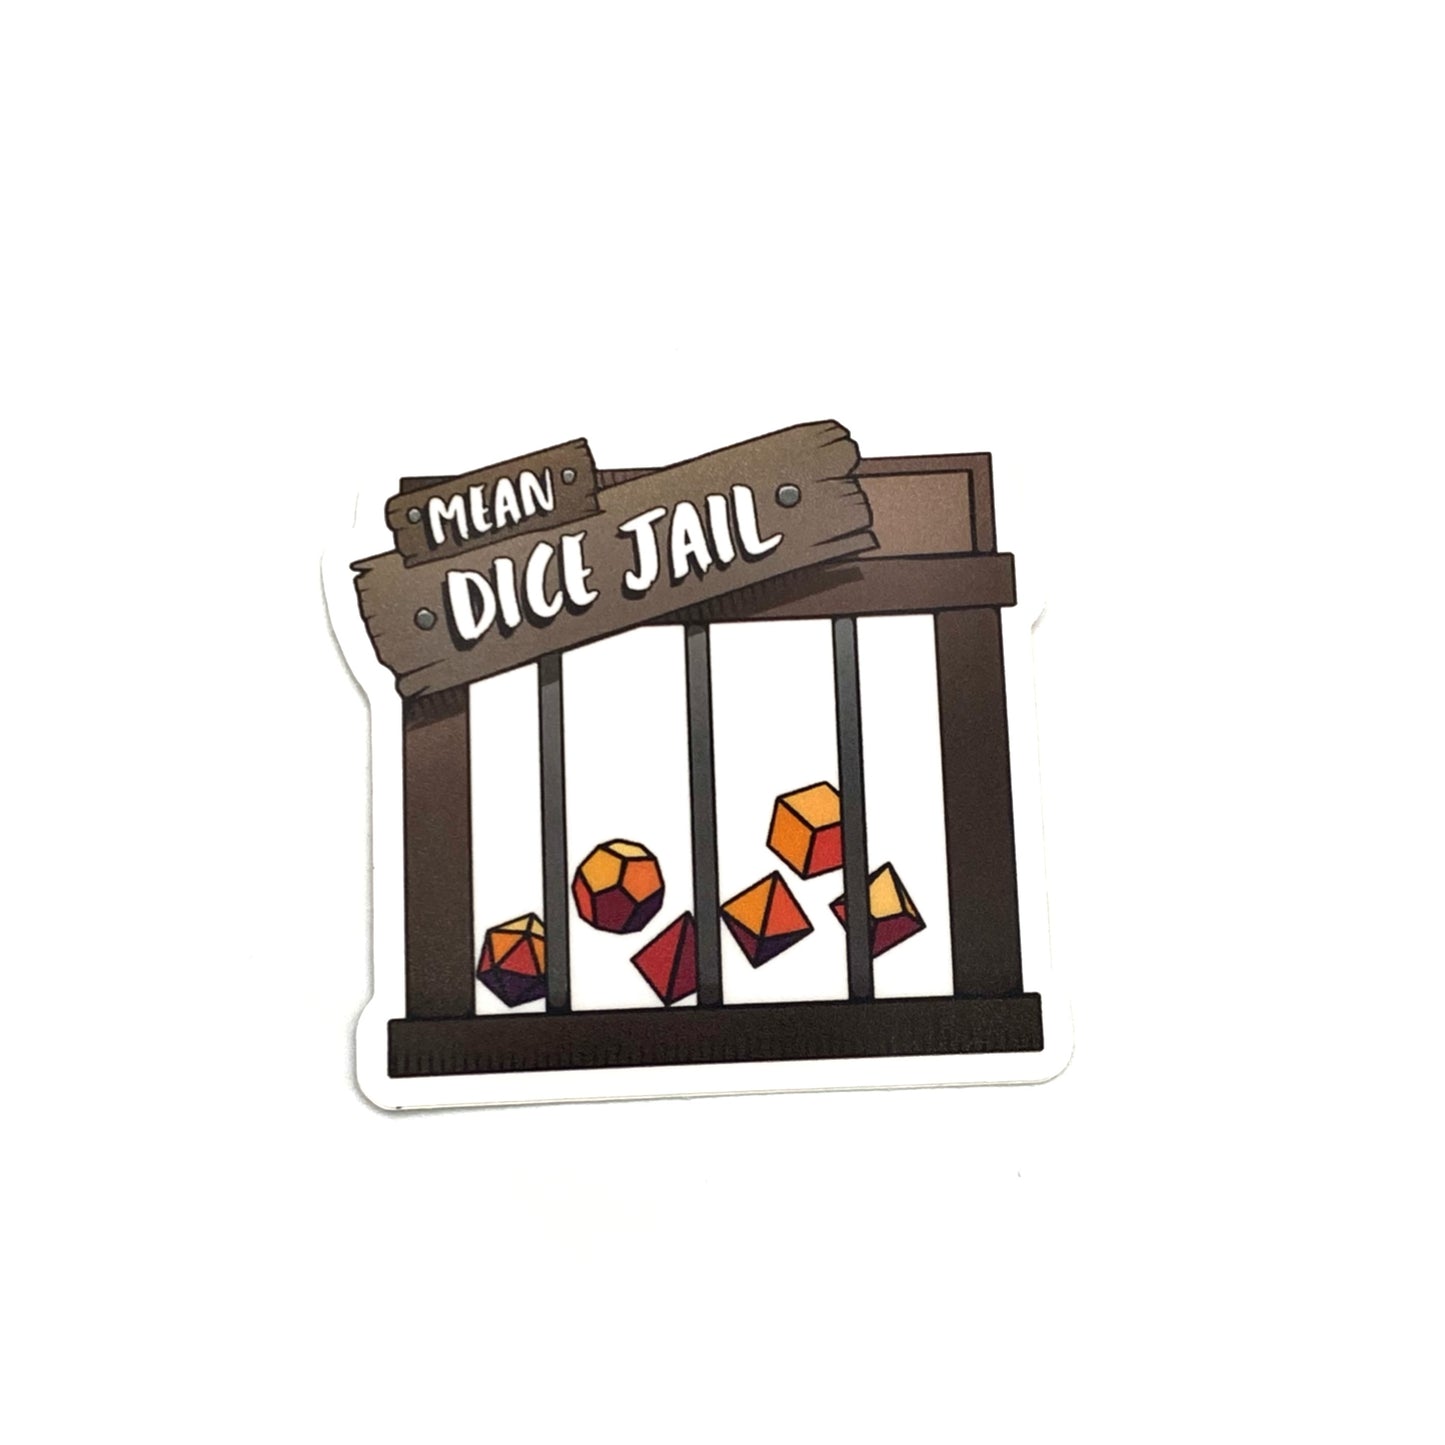 Dice Jail Sticker